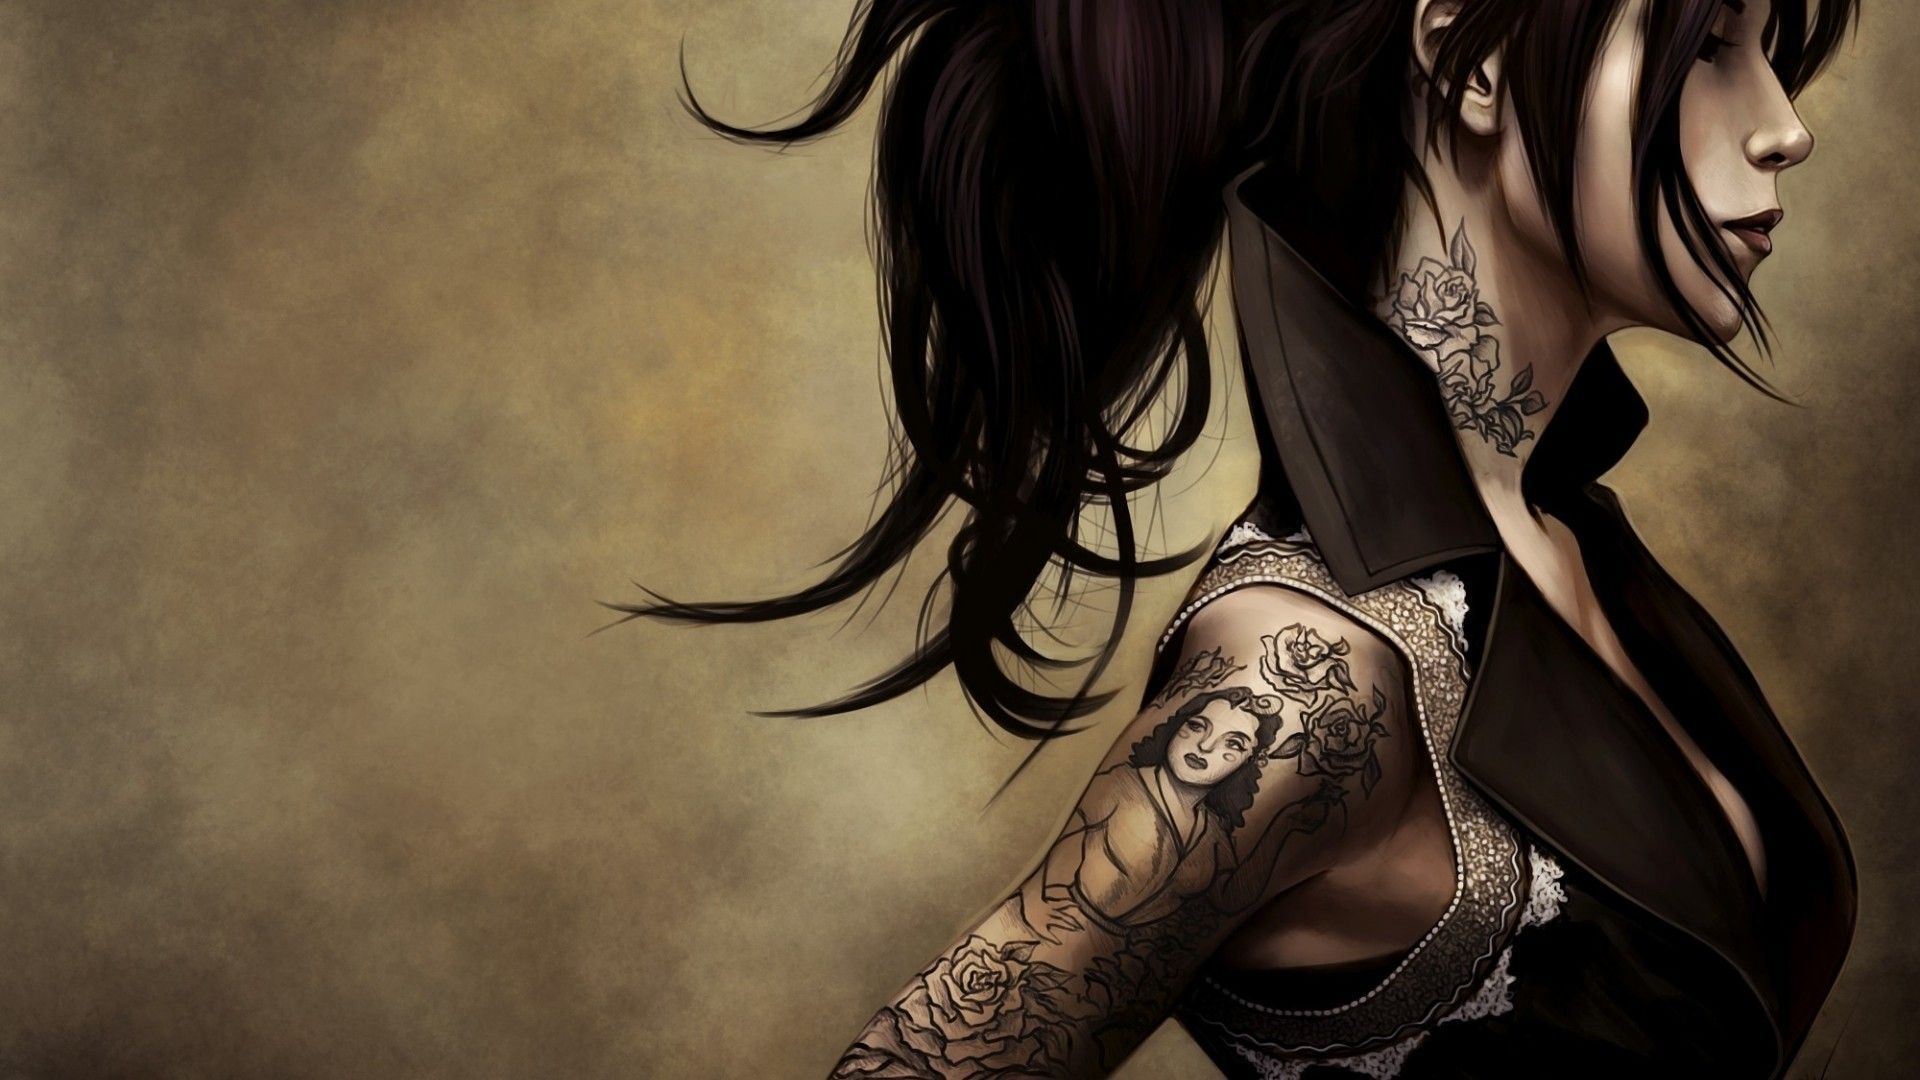 Tattoo Designs Photo Studio by Ana Kitanovic